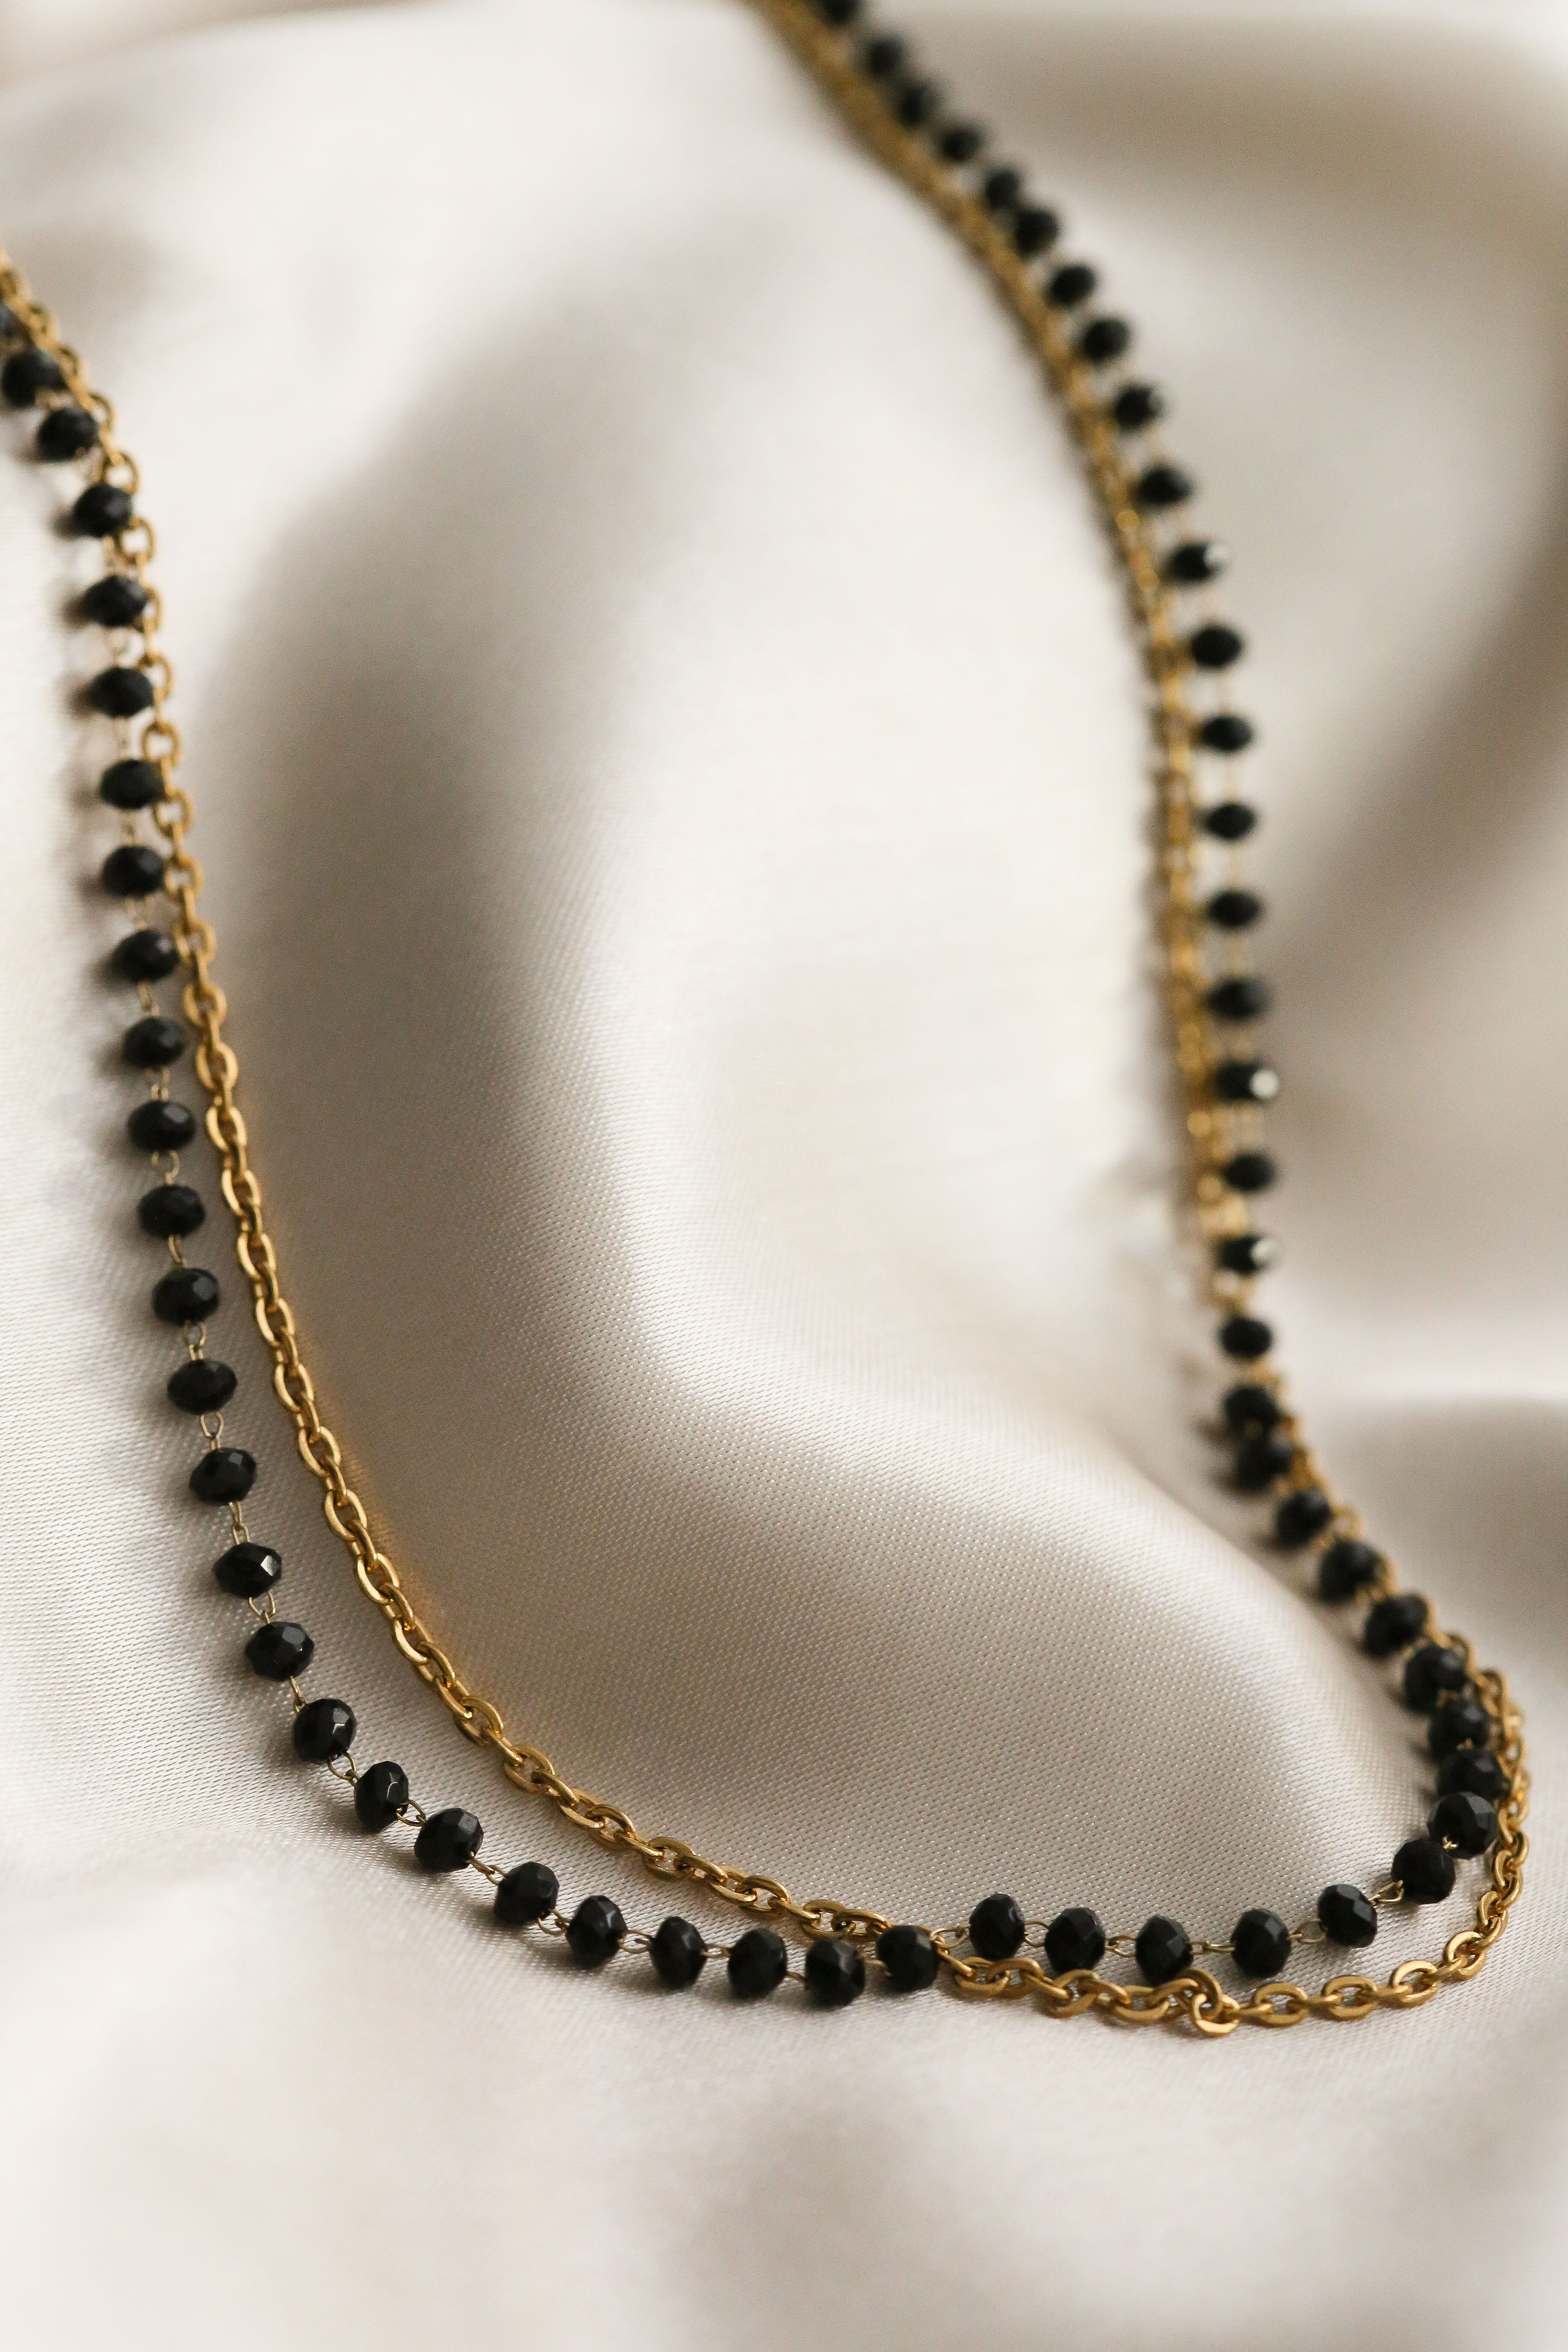 Bridget Necklace - Boutique Minimaliste has waterproof, durable, elegant and vintage inspired jewelry